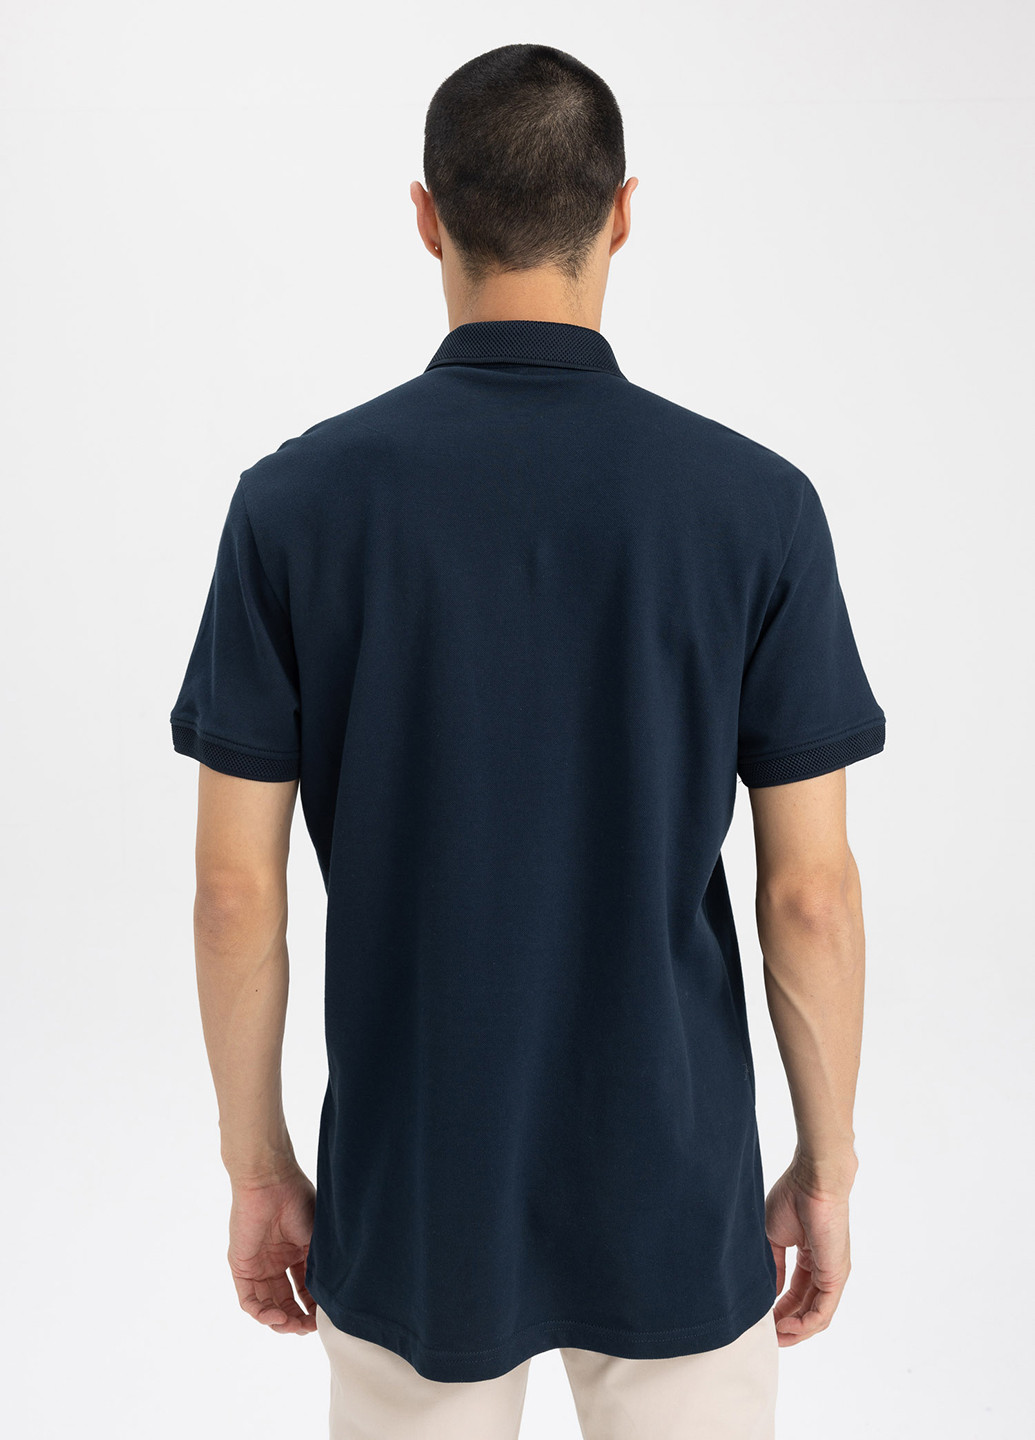 Темно-синяя футболка-поло для мужчин DeFacto однотонная